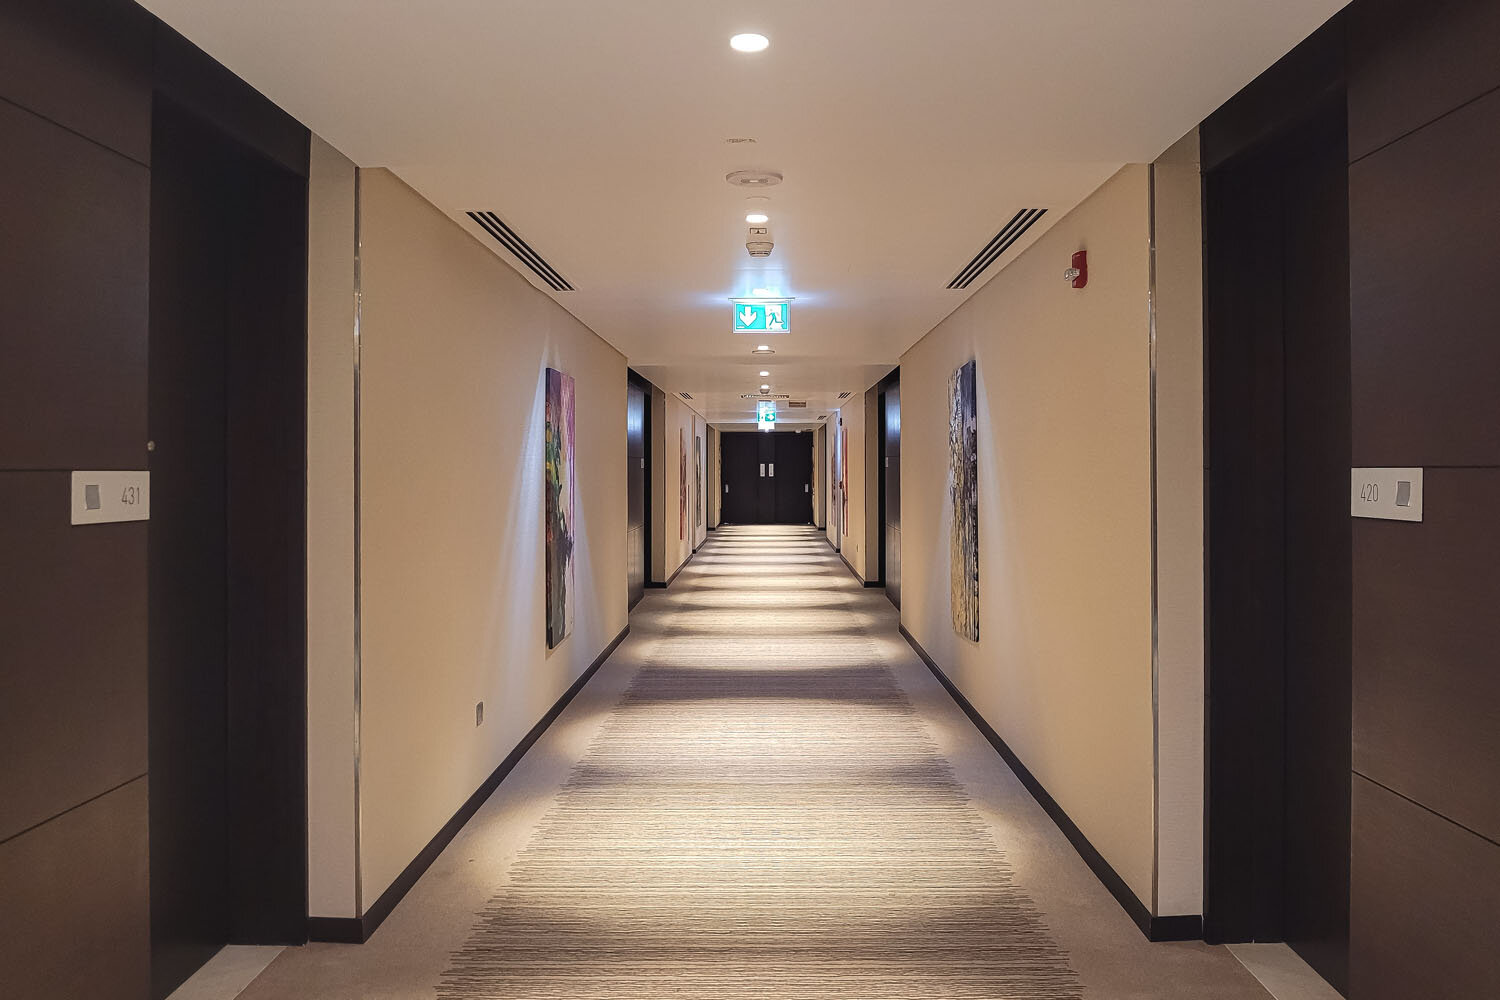  The corridor 